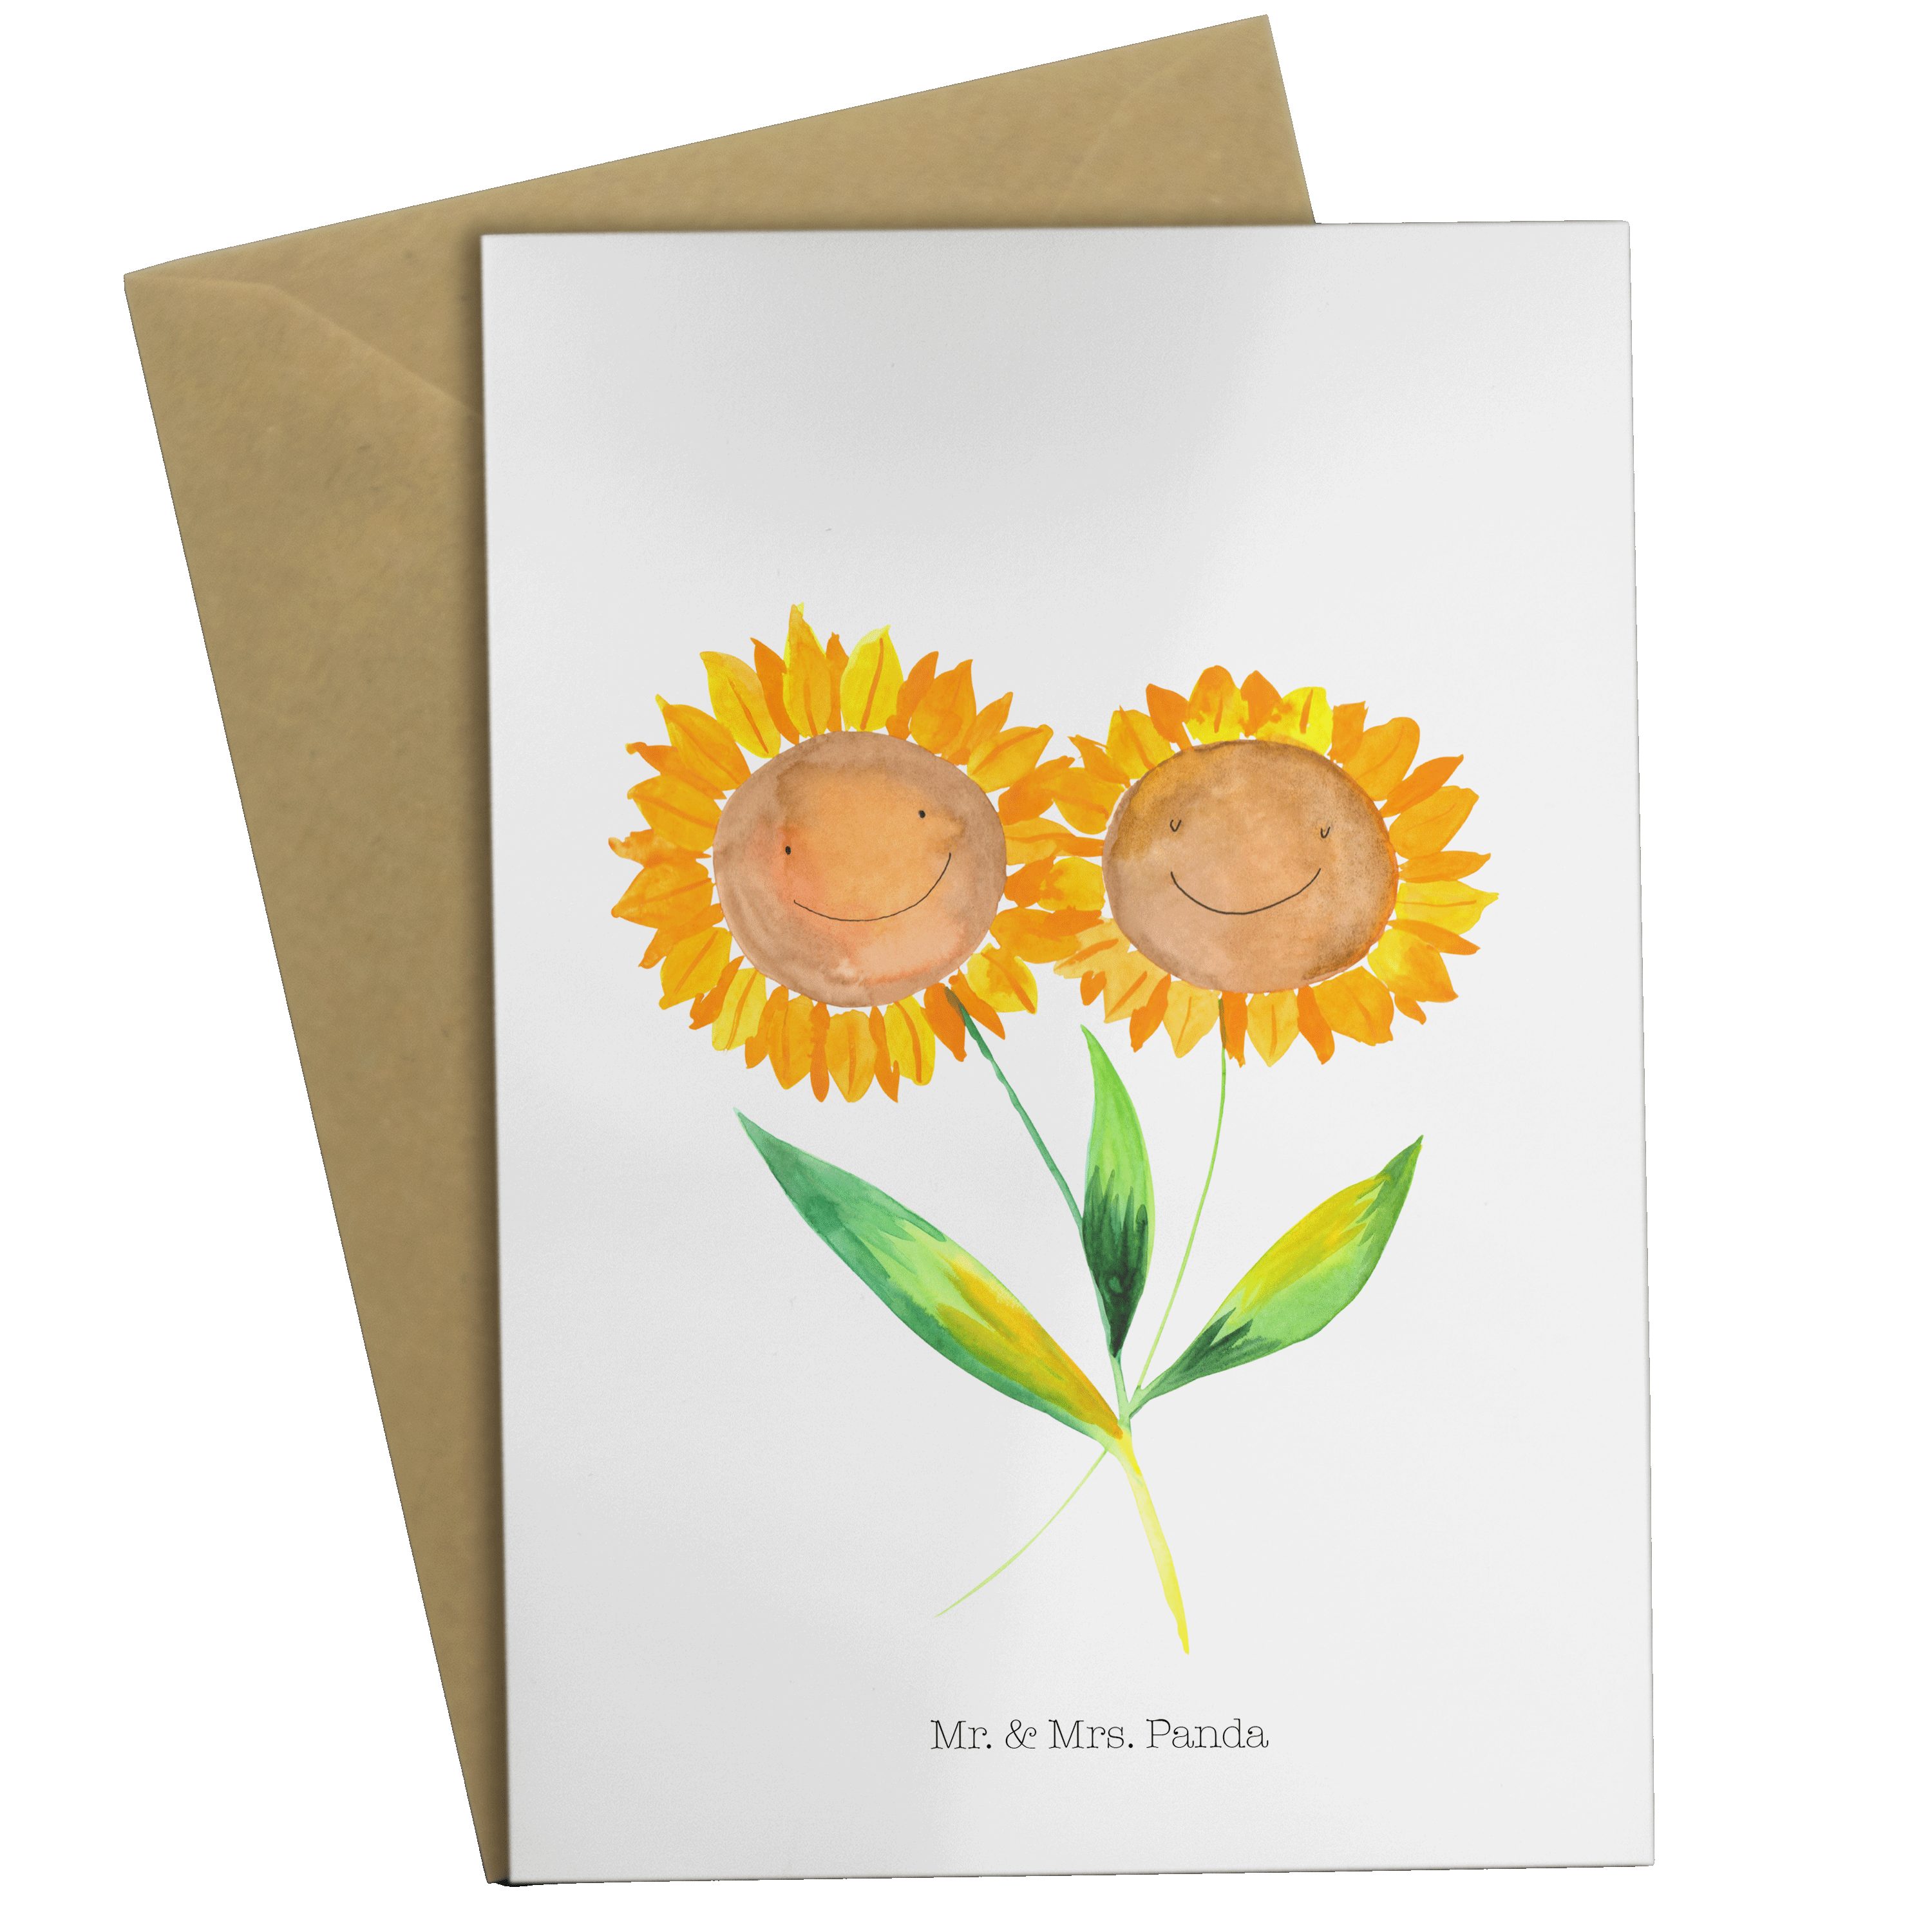 Mr. & Mrs. Panda Grußkarte Sonnenblume - Weiß - Geschenk, Geburtstagskarte, Lieblingsmensch, Fre